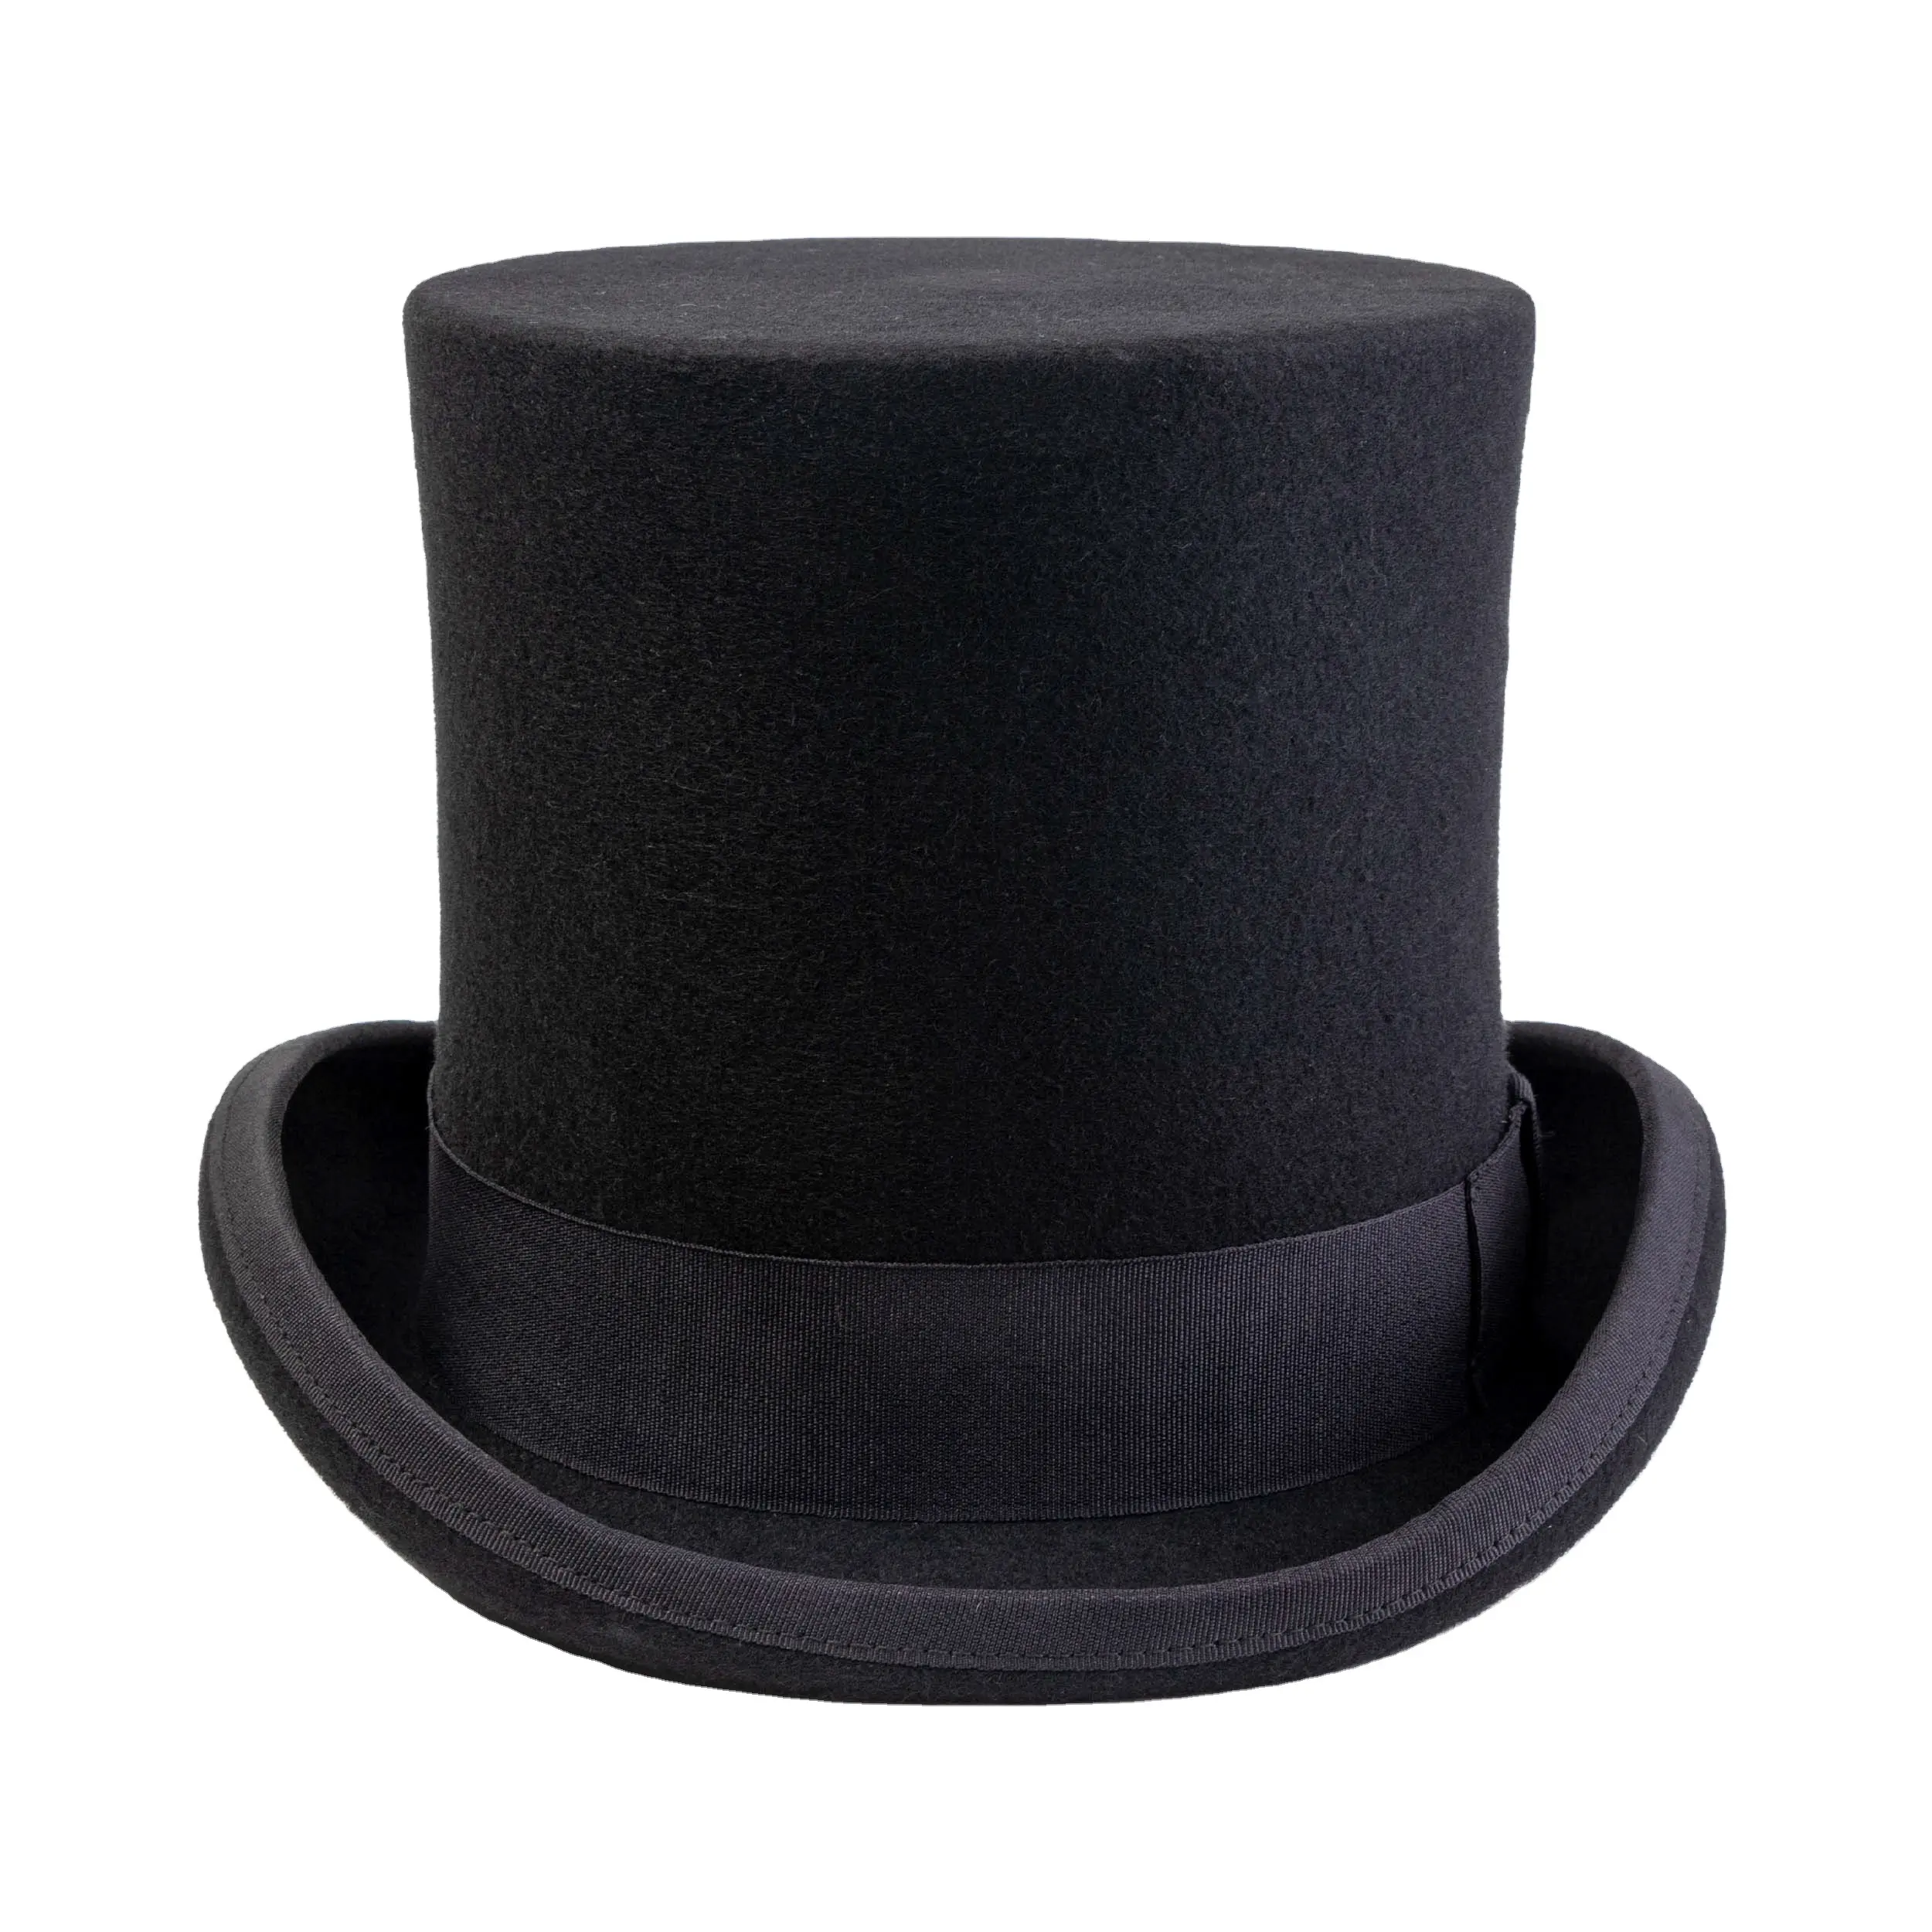 HUAYI HATS custom black women and men top hats with logo 100% wool top hats